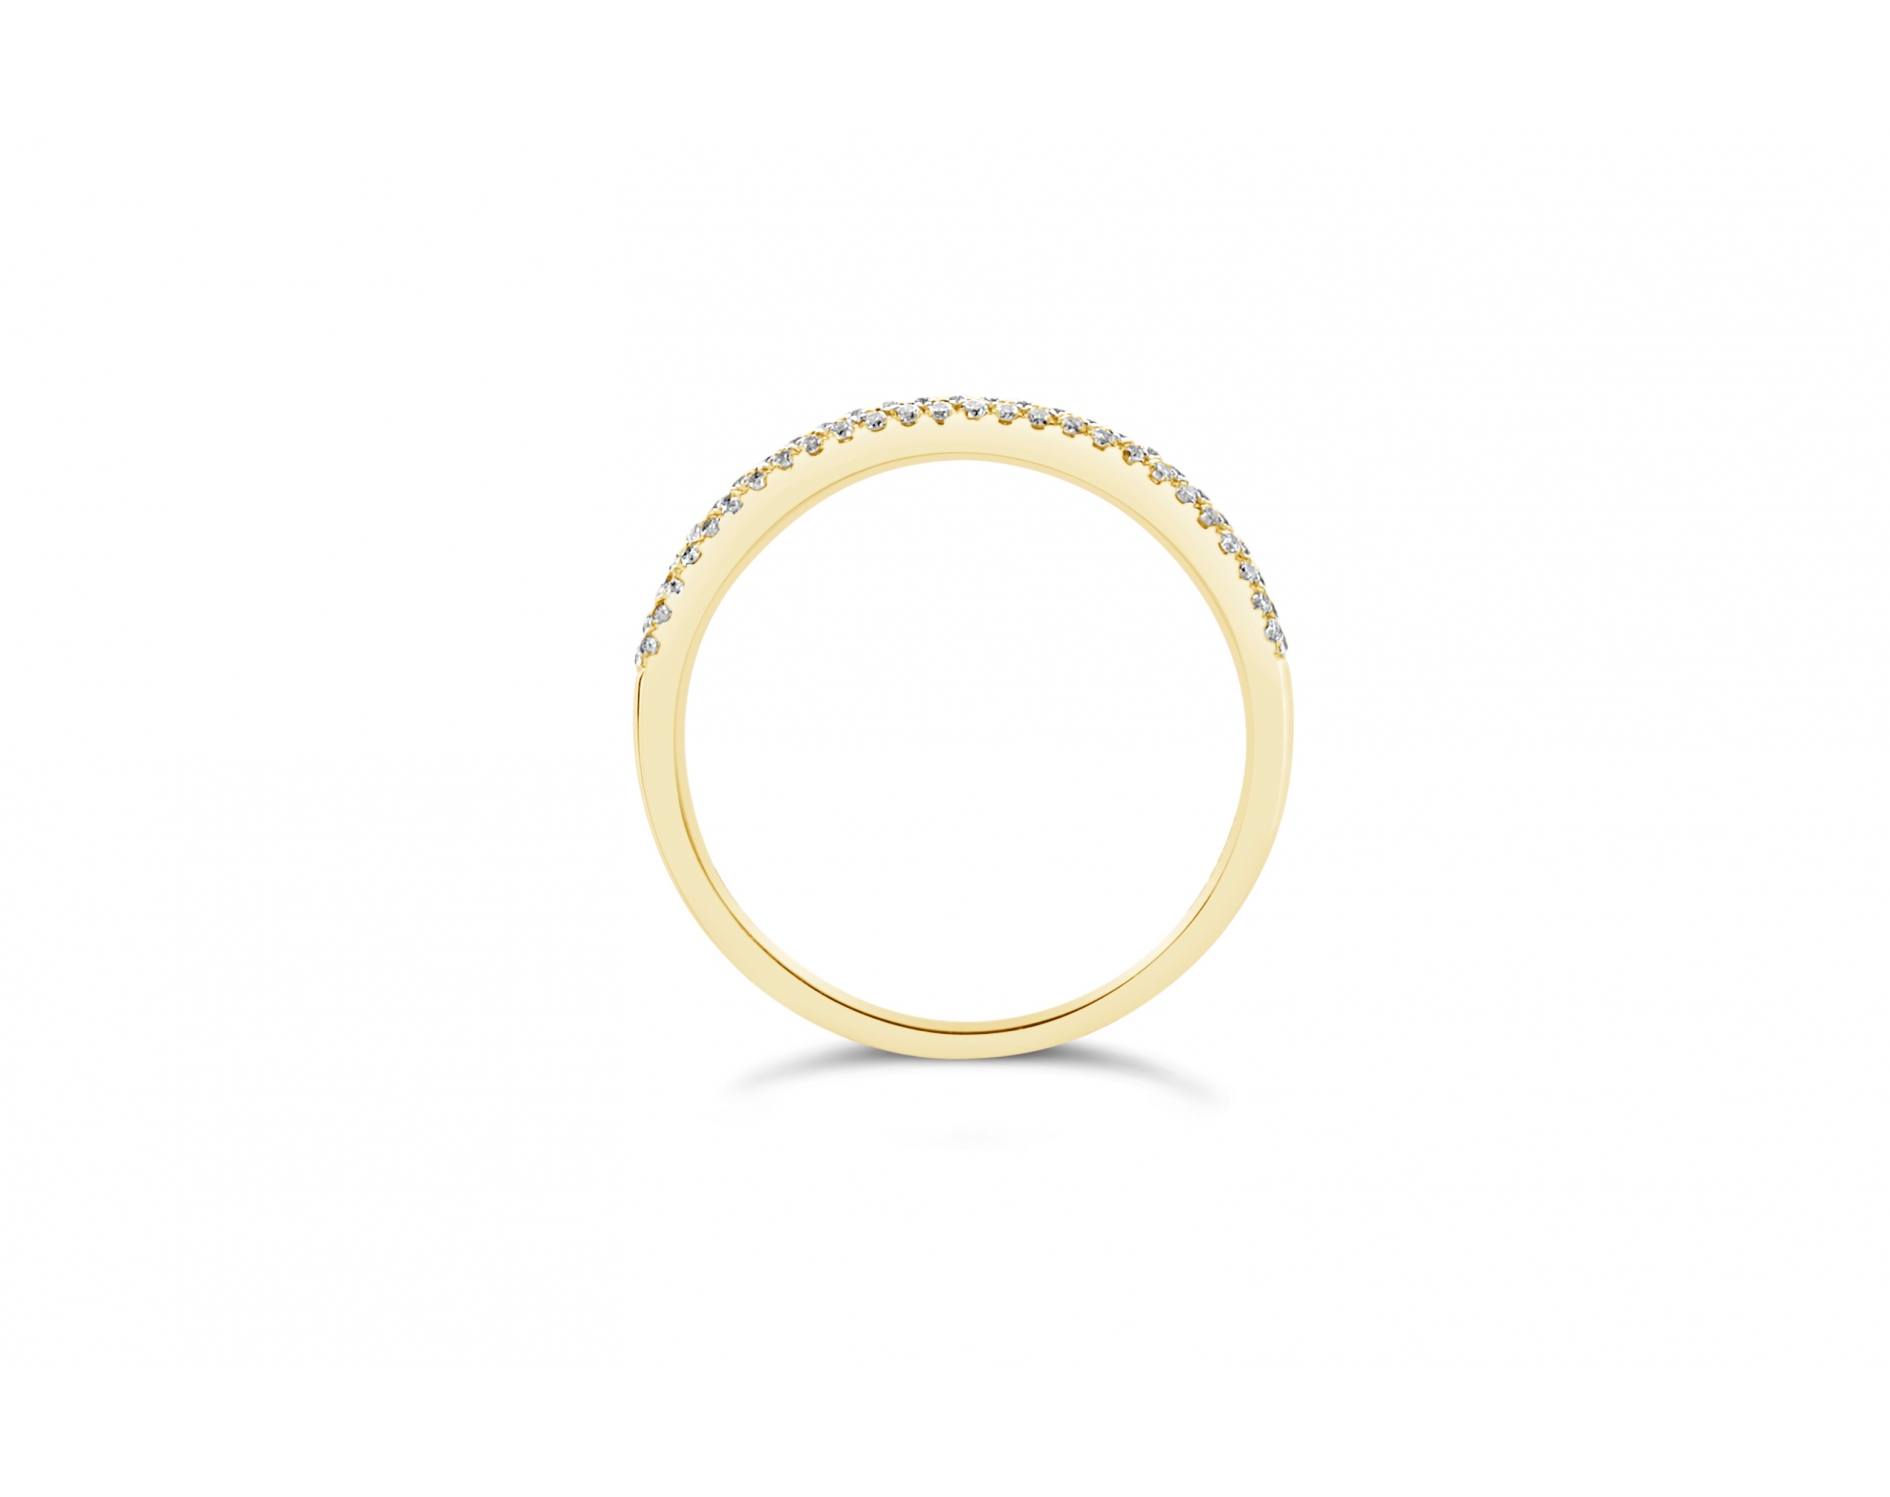 18k yellow gold 3-row bombay half eternity round shaped diamond wedding ring Photos & images